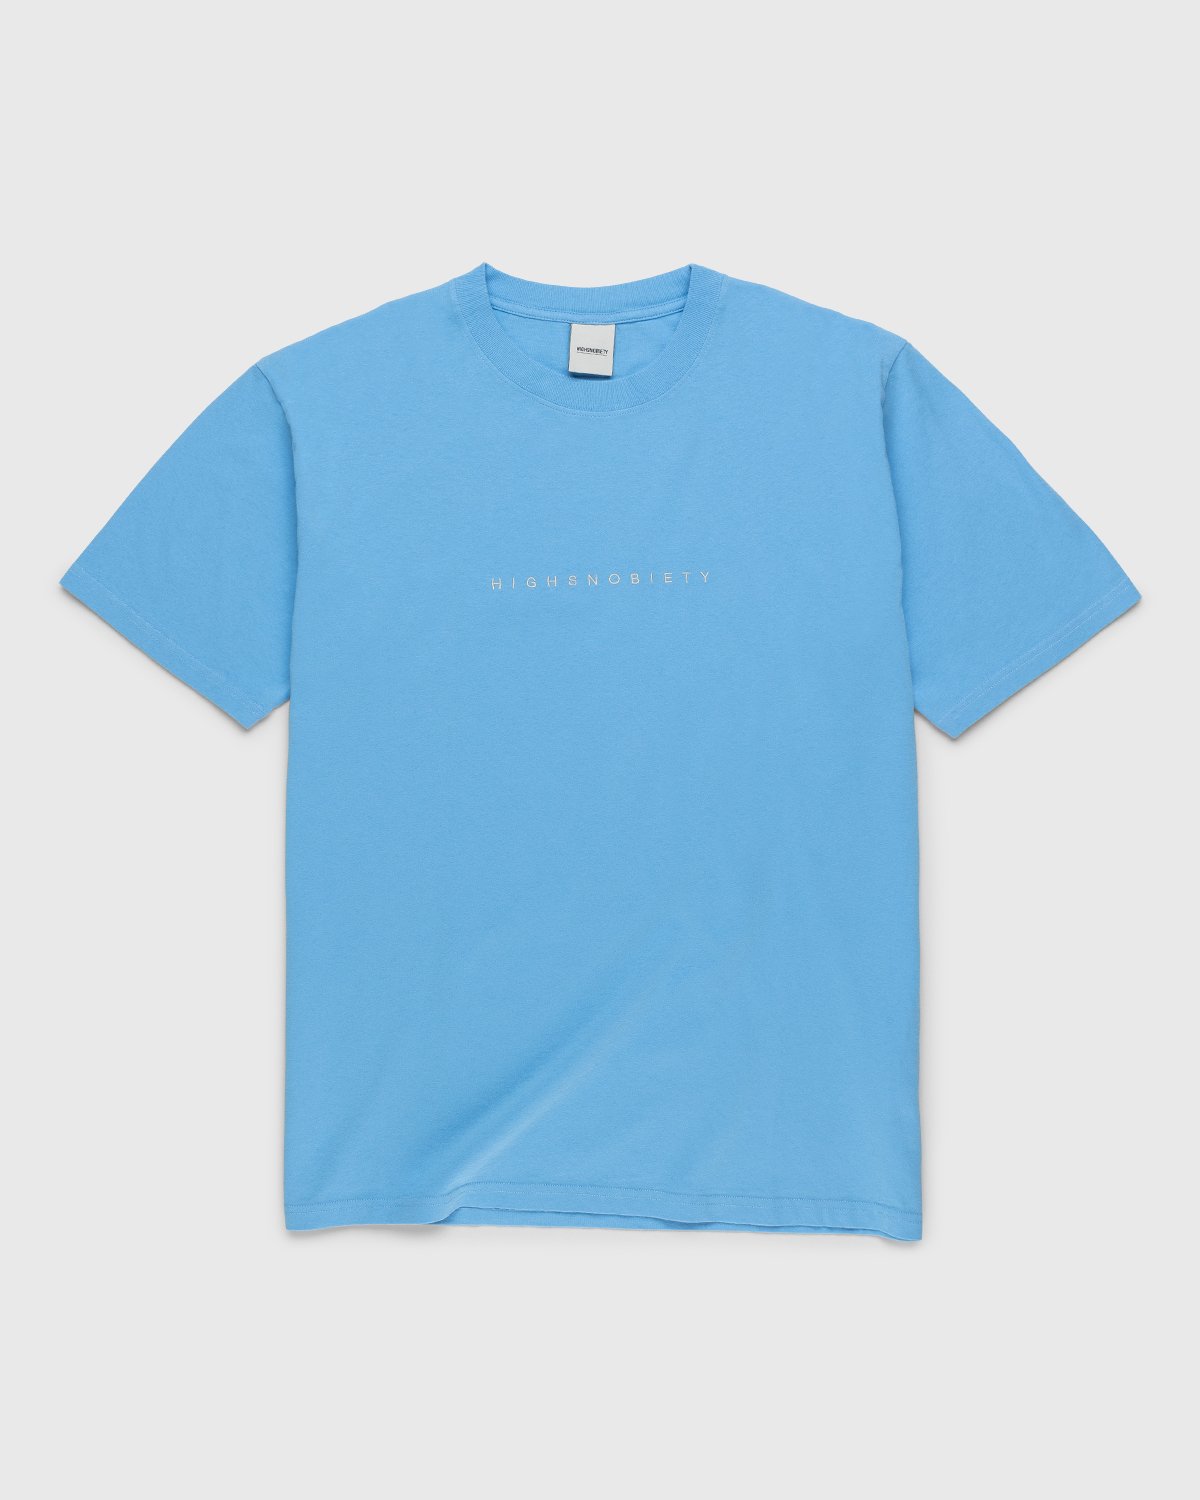 Highsnobiety - Staples T-Shirt Sky Blue - Clothing - Blue - Image 1